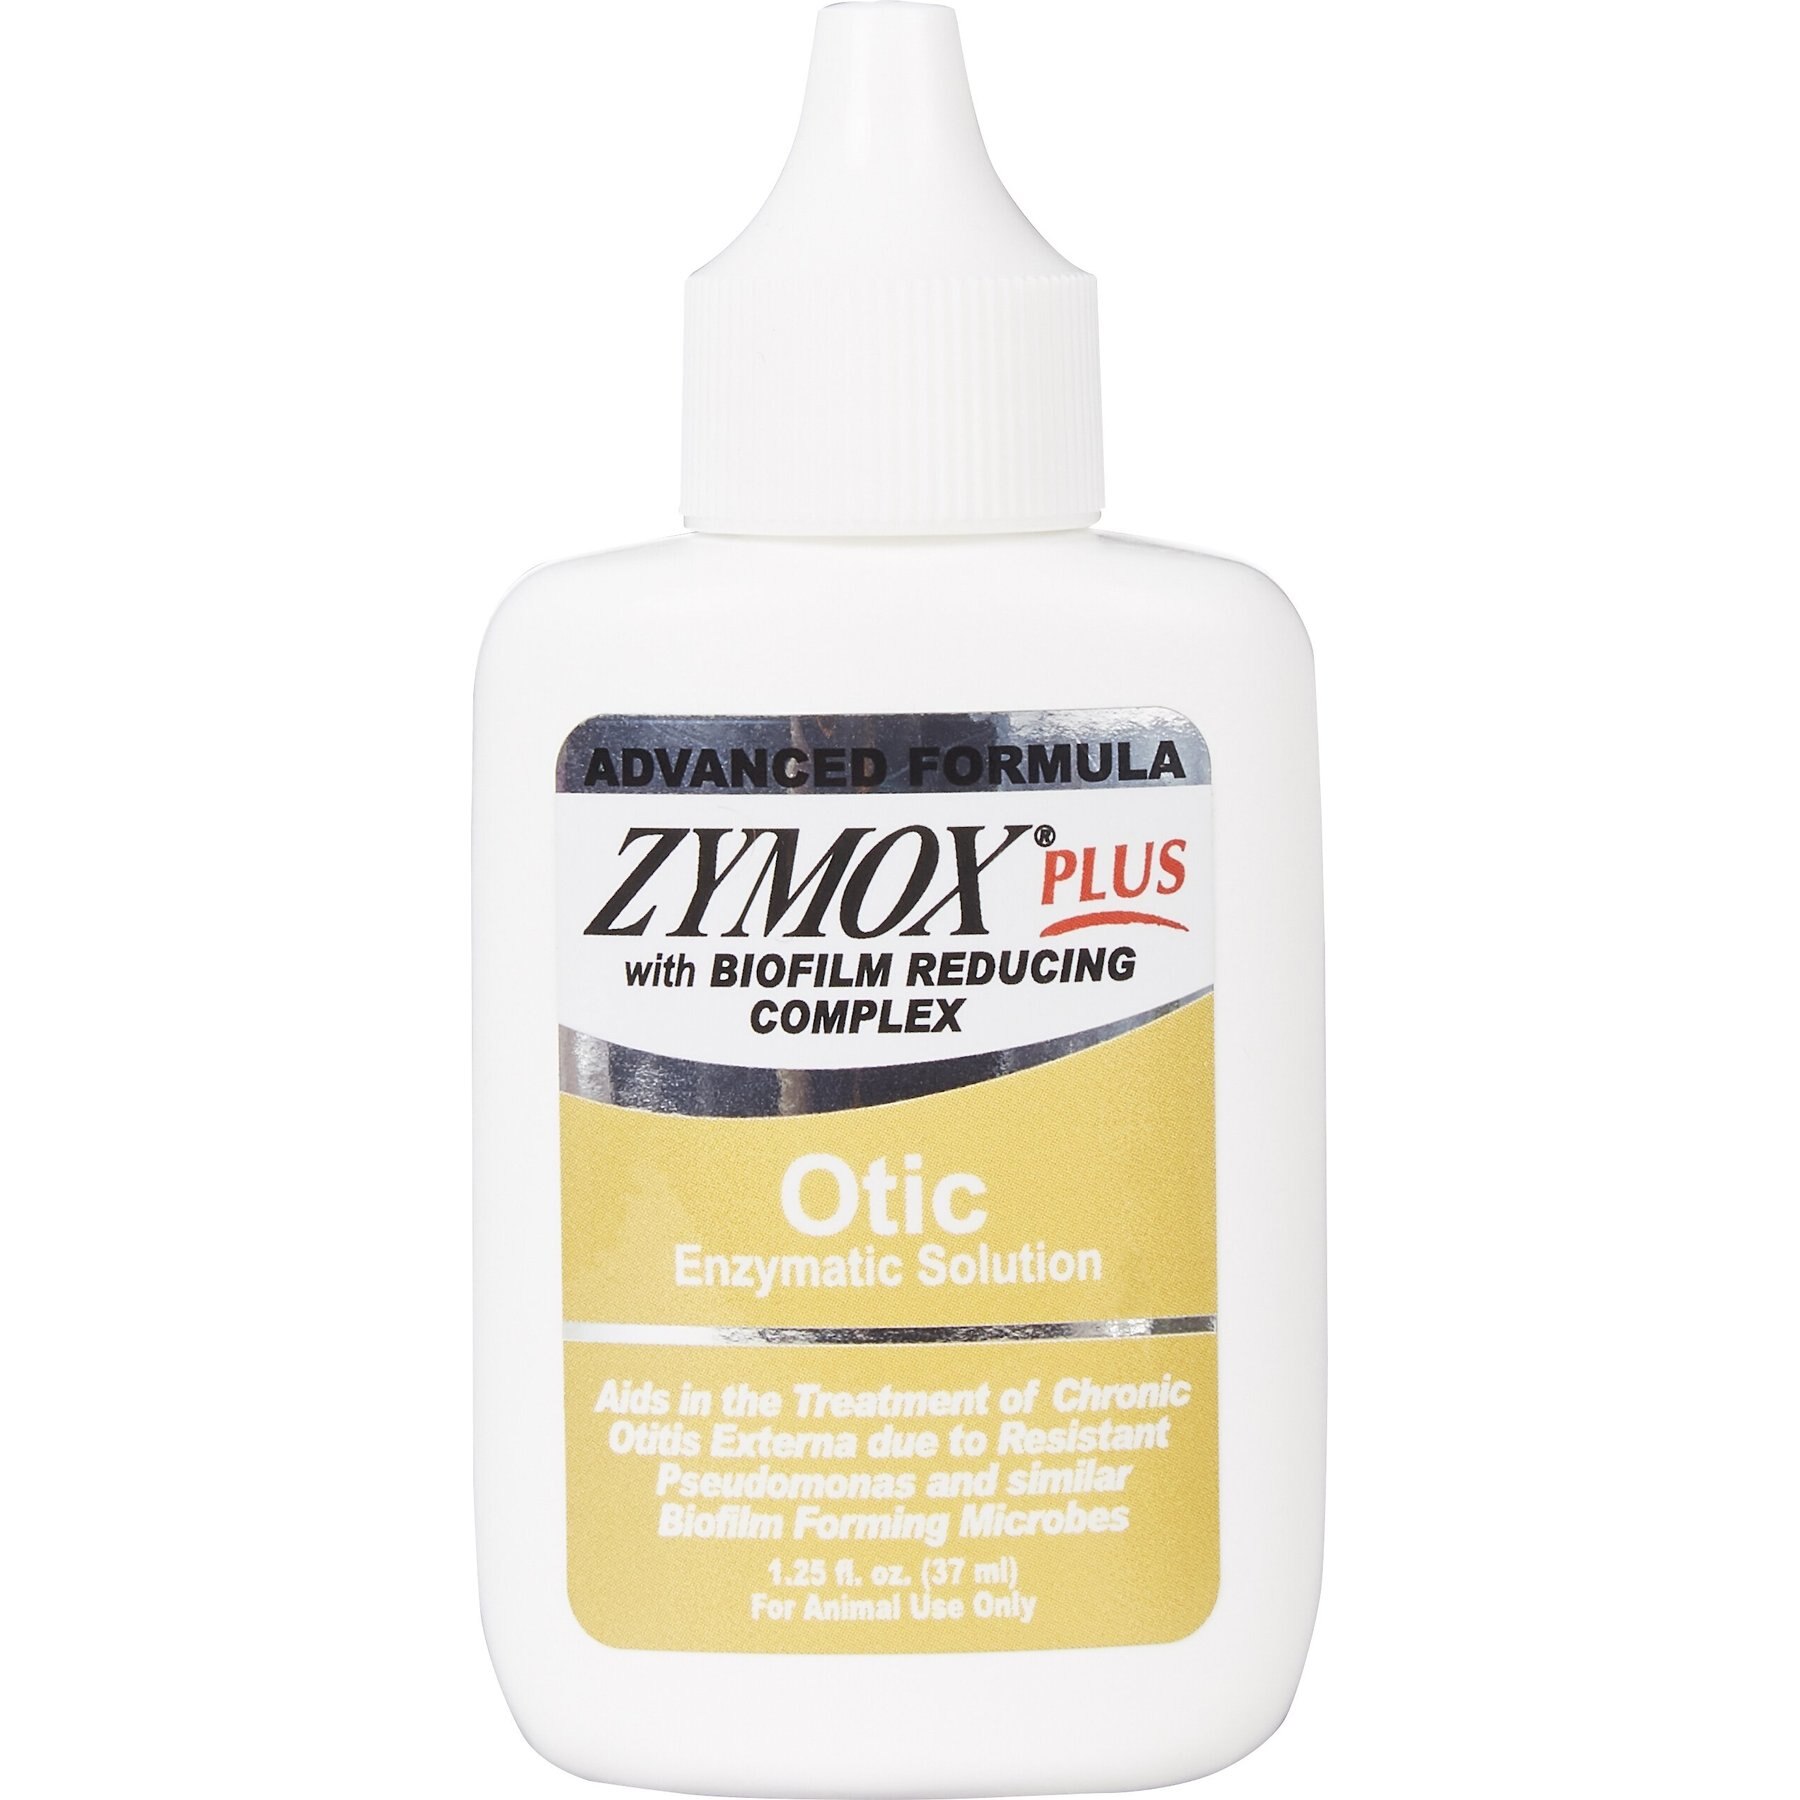 Zymox Plus Advanced Formula Otic Dog & Cat Ear Infection Solution, 1.25-oz  bottle